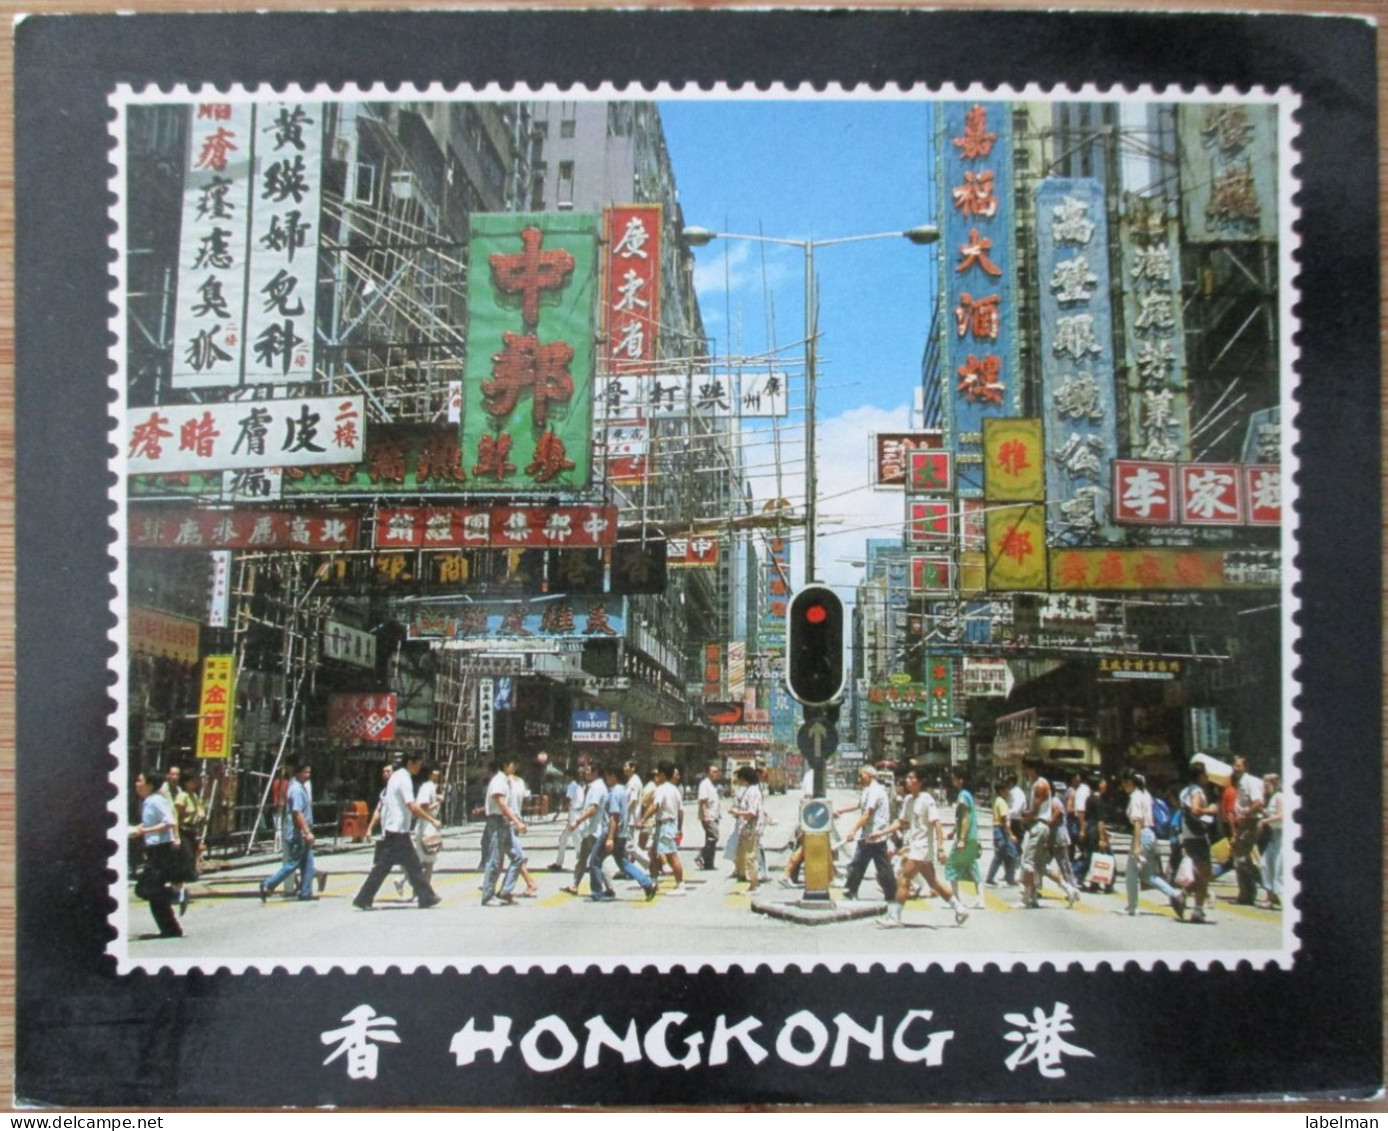 CHINA PEOPLES REPUBLIC HONG KONG MONKOK KOWLOON CARD POSTCARD ANSICHTSKARTE CARTOLINA CARD POSTKARTE CARTE POSTALE - China